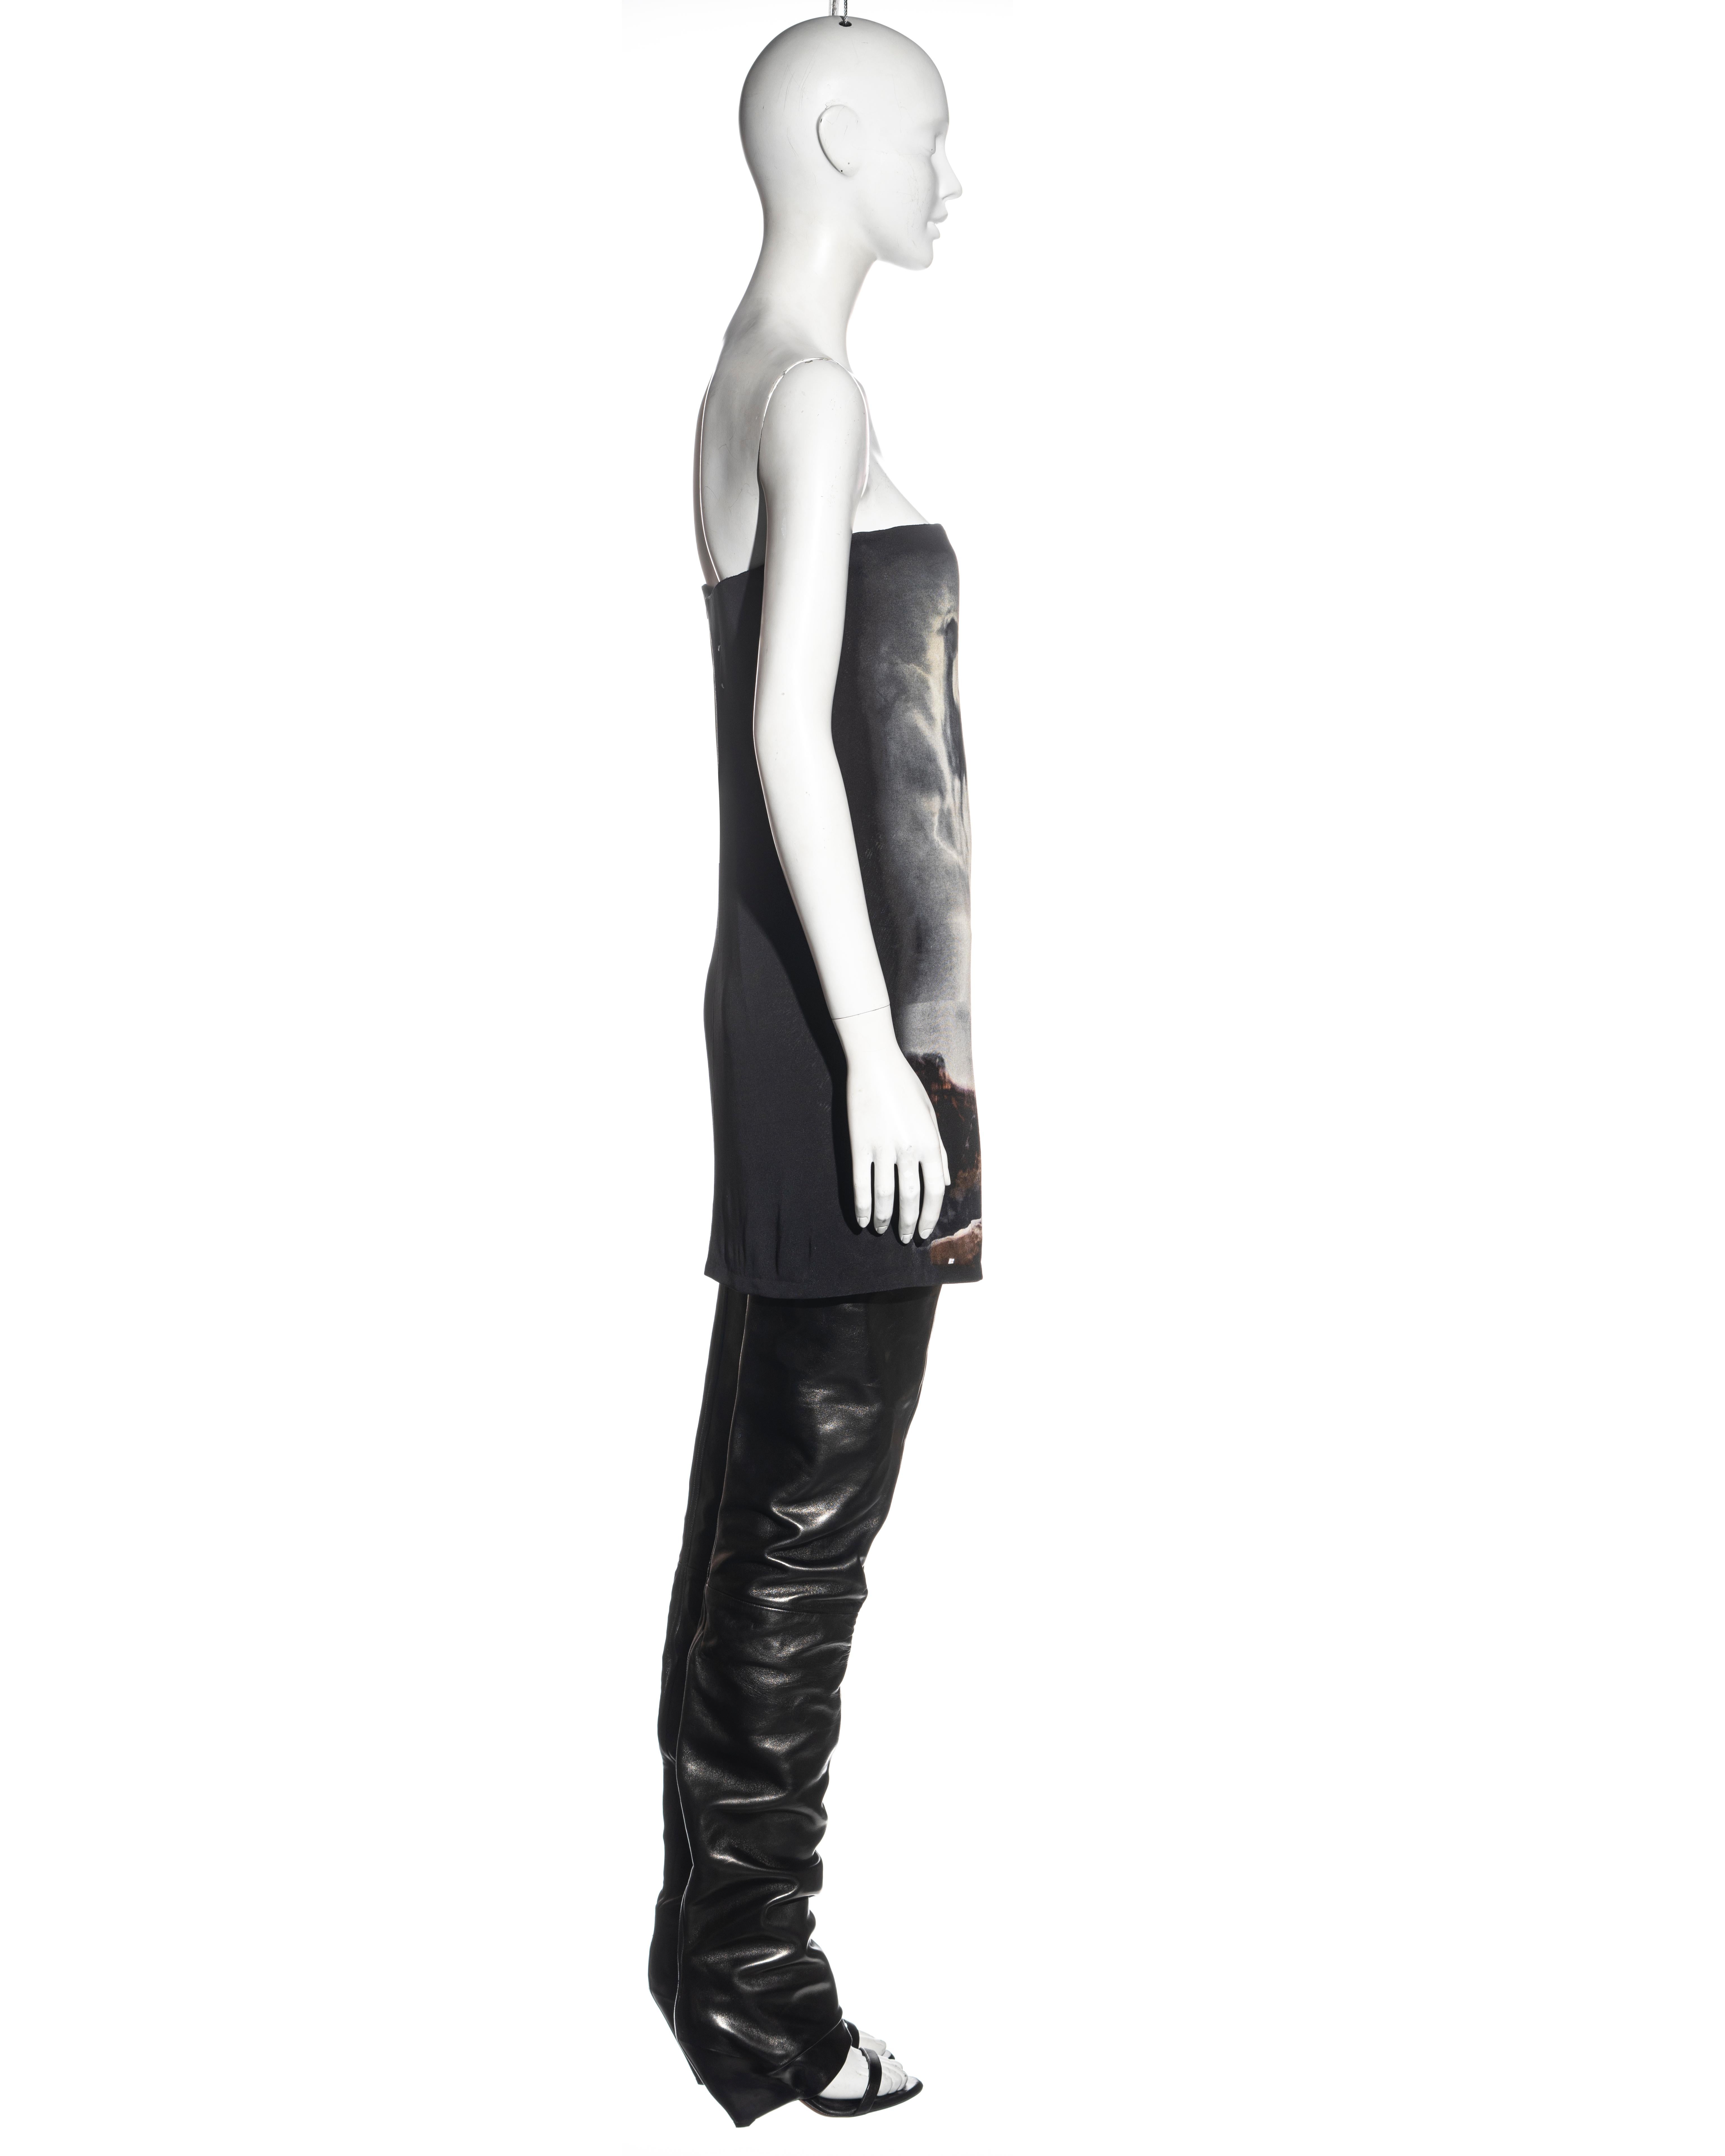 Martin Margiela strapless dress and thigh high boots runway ensemble, ss 2008 1